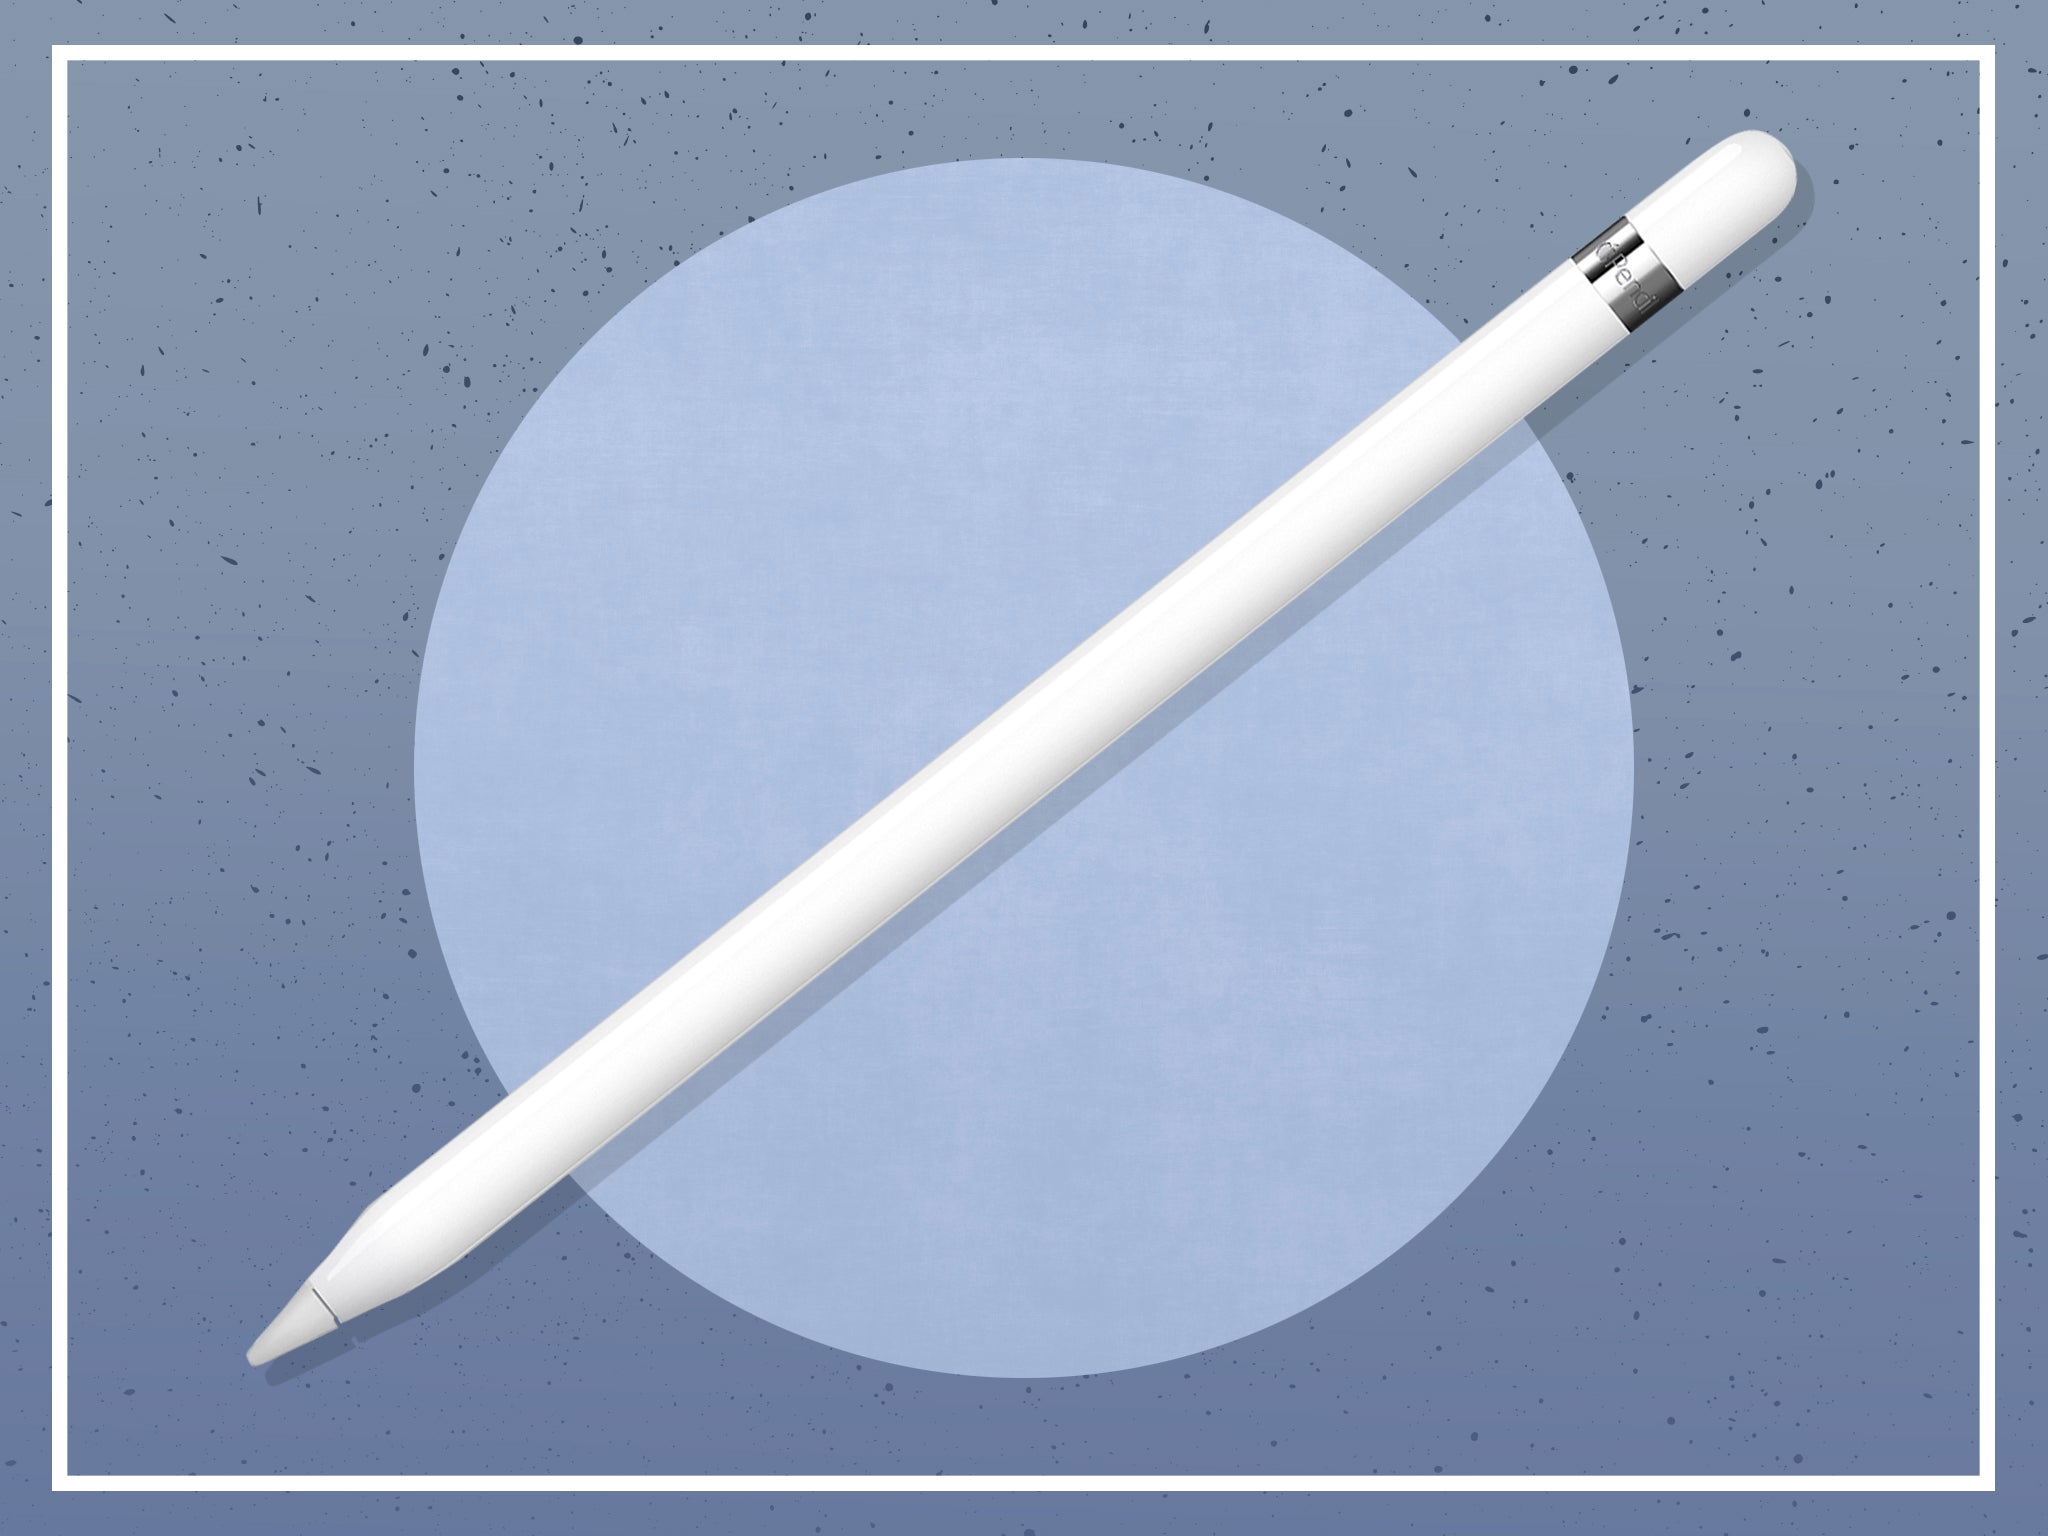 affinity designer apple pencil